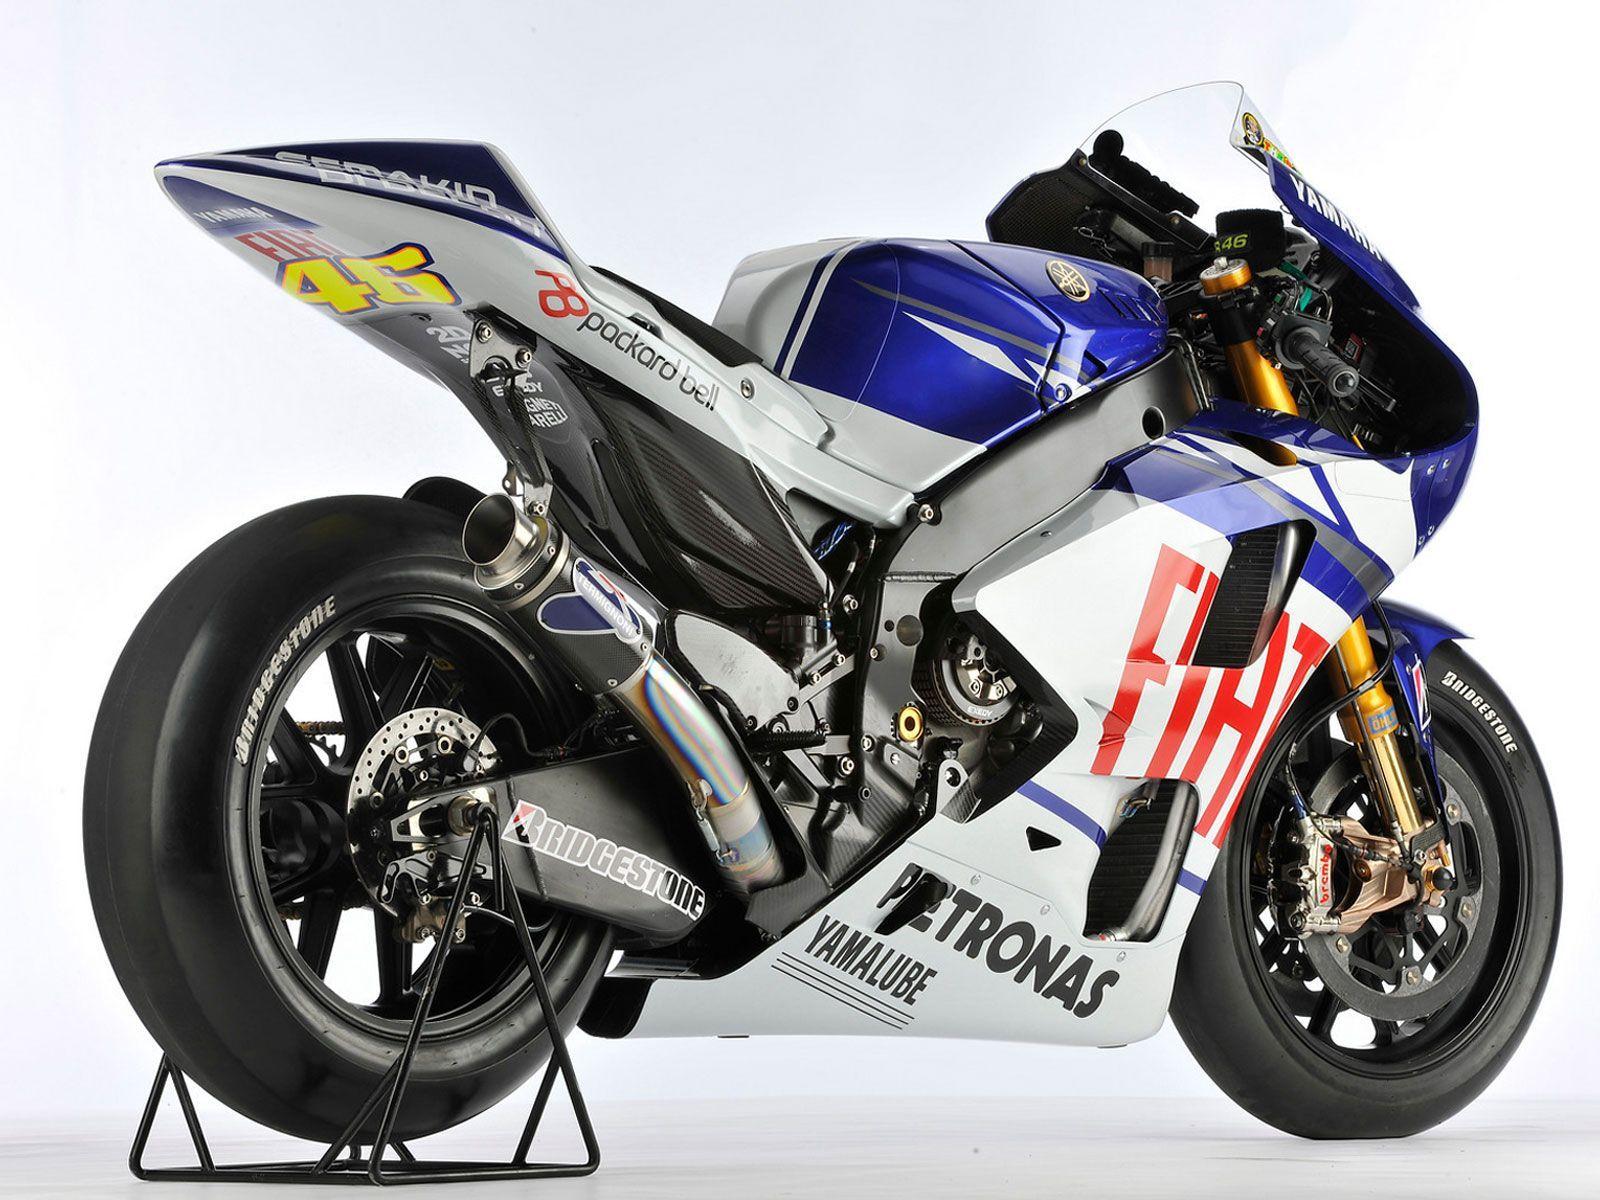 Fiat Yamaha Team Unveils 2010 YZR M1 Bikes. MotoGP Wallpaper 2010